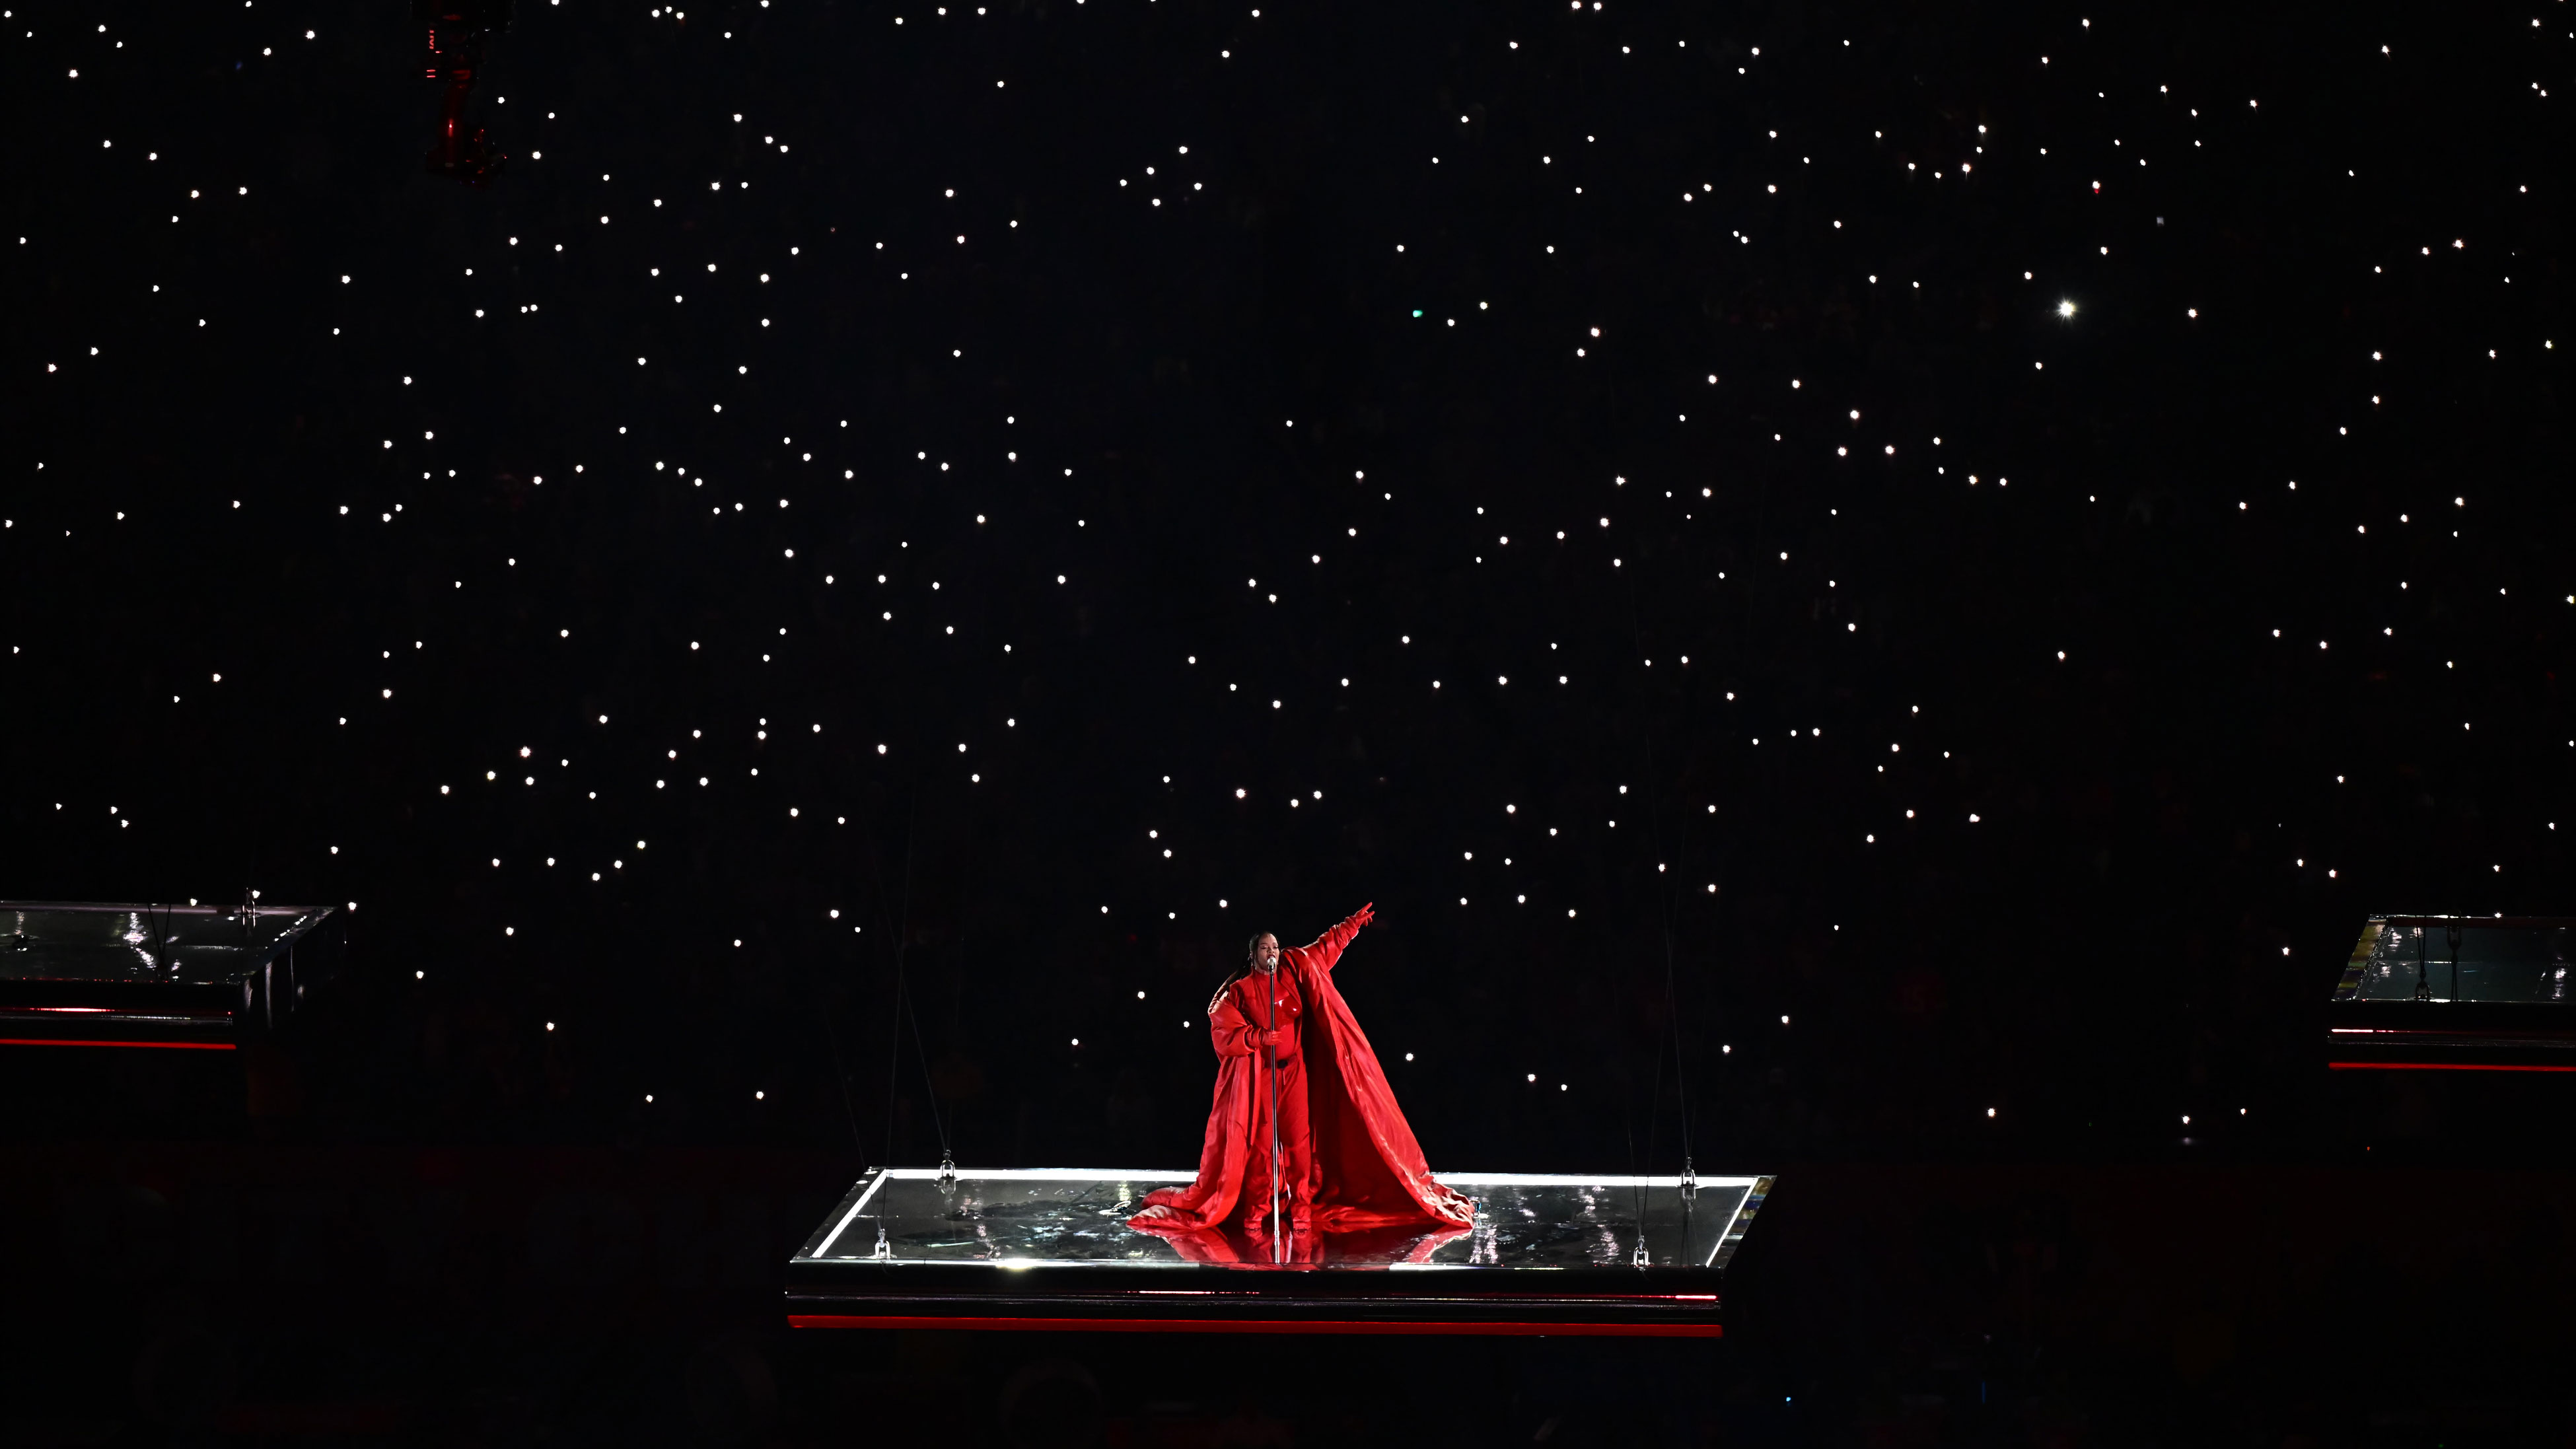 Rihanna's Super Bowl halftime show: the stage design